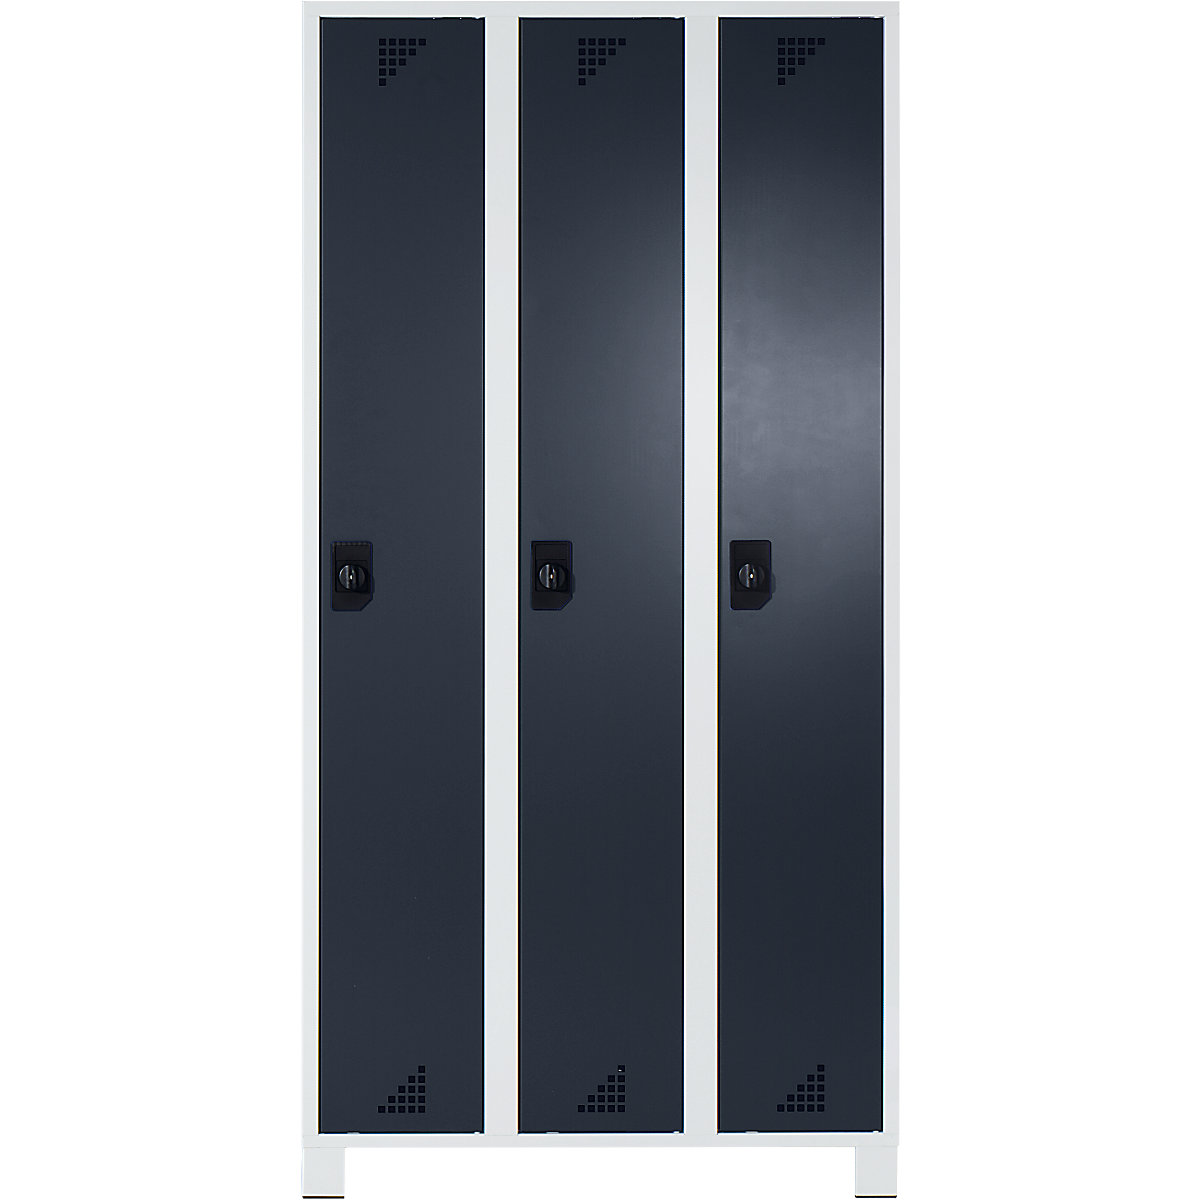 Multi-purpose cupboard and cloakroom locker – eurokraft pro, locker height 1695 mm, 3 compartments, width 900 mm, light grey body, charcoal doors